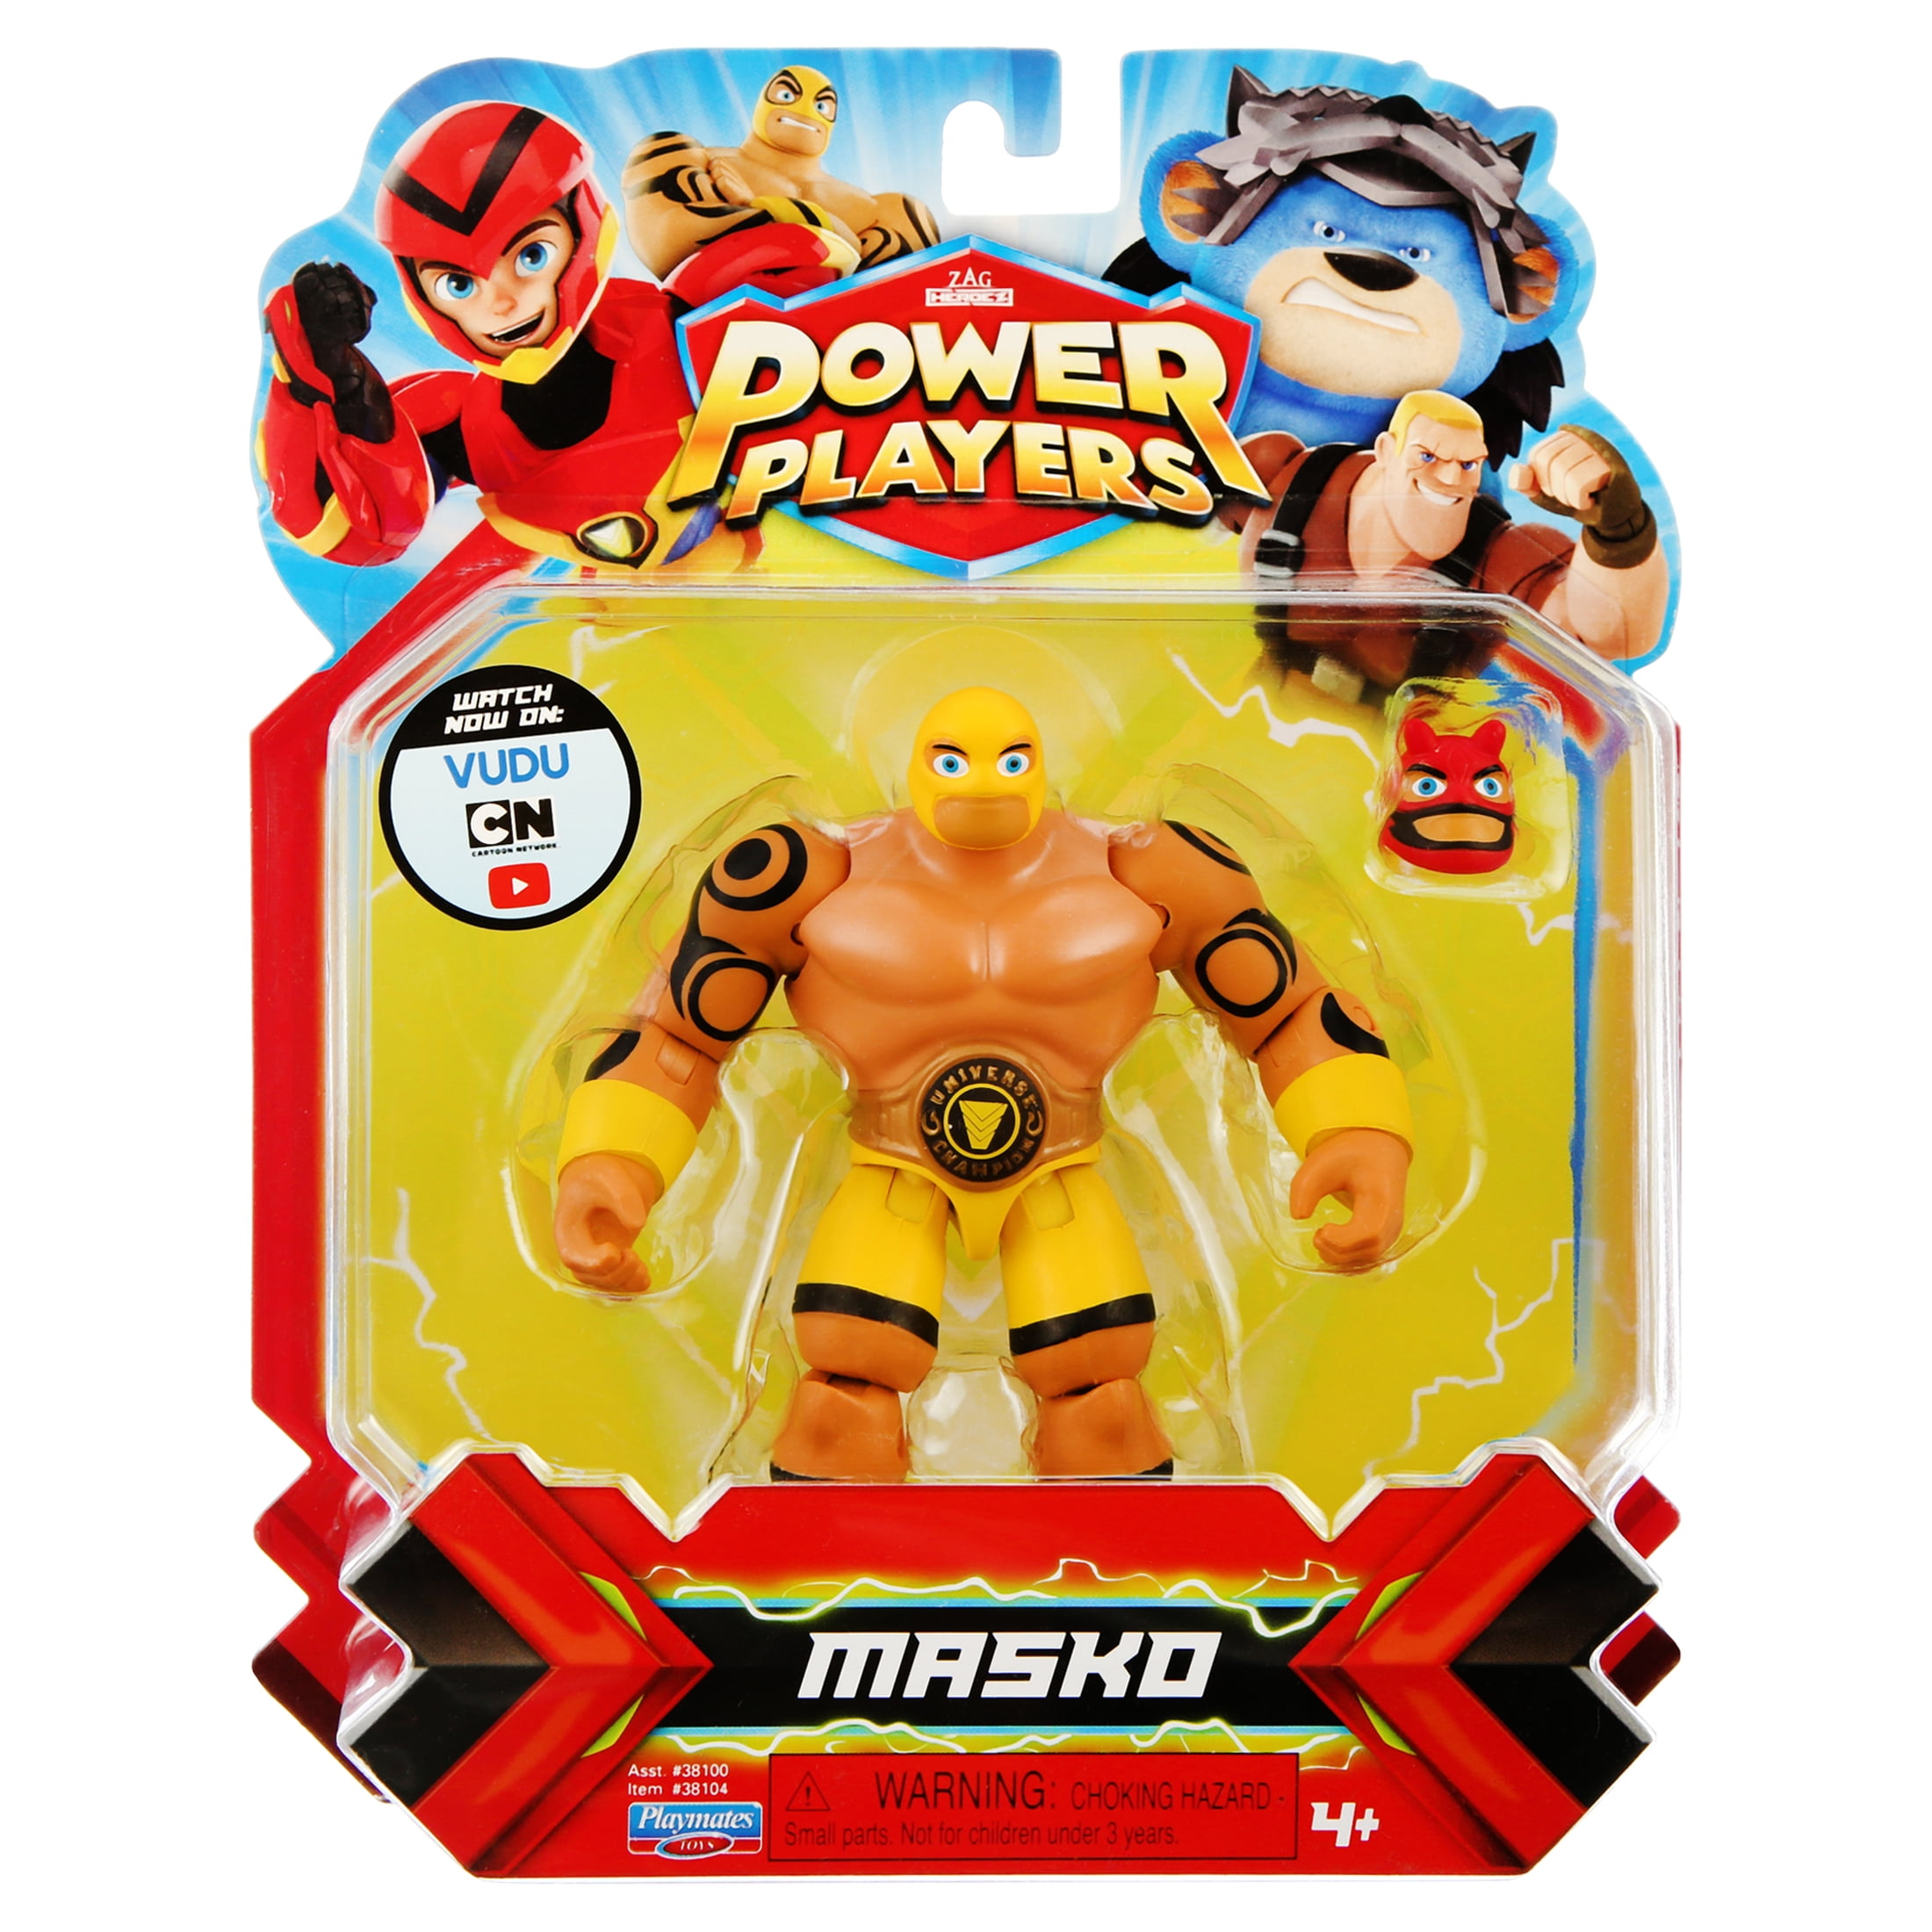 Masko Power Players Action Figure Playmates Toys 38104 Cartoon Network New